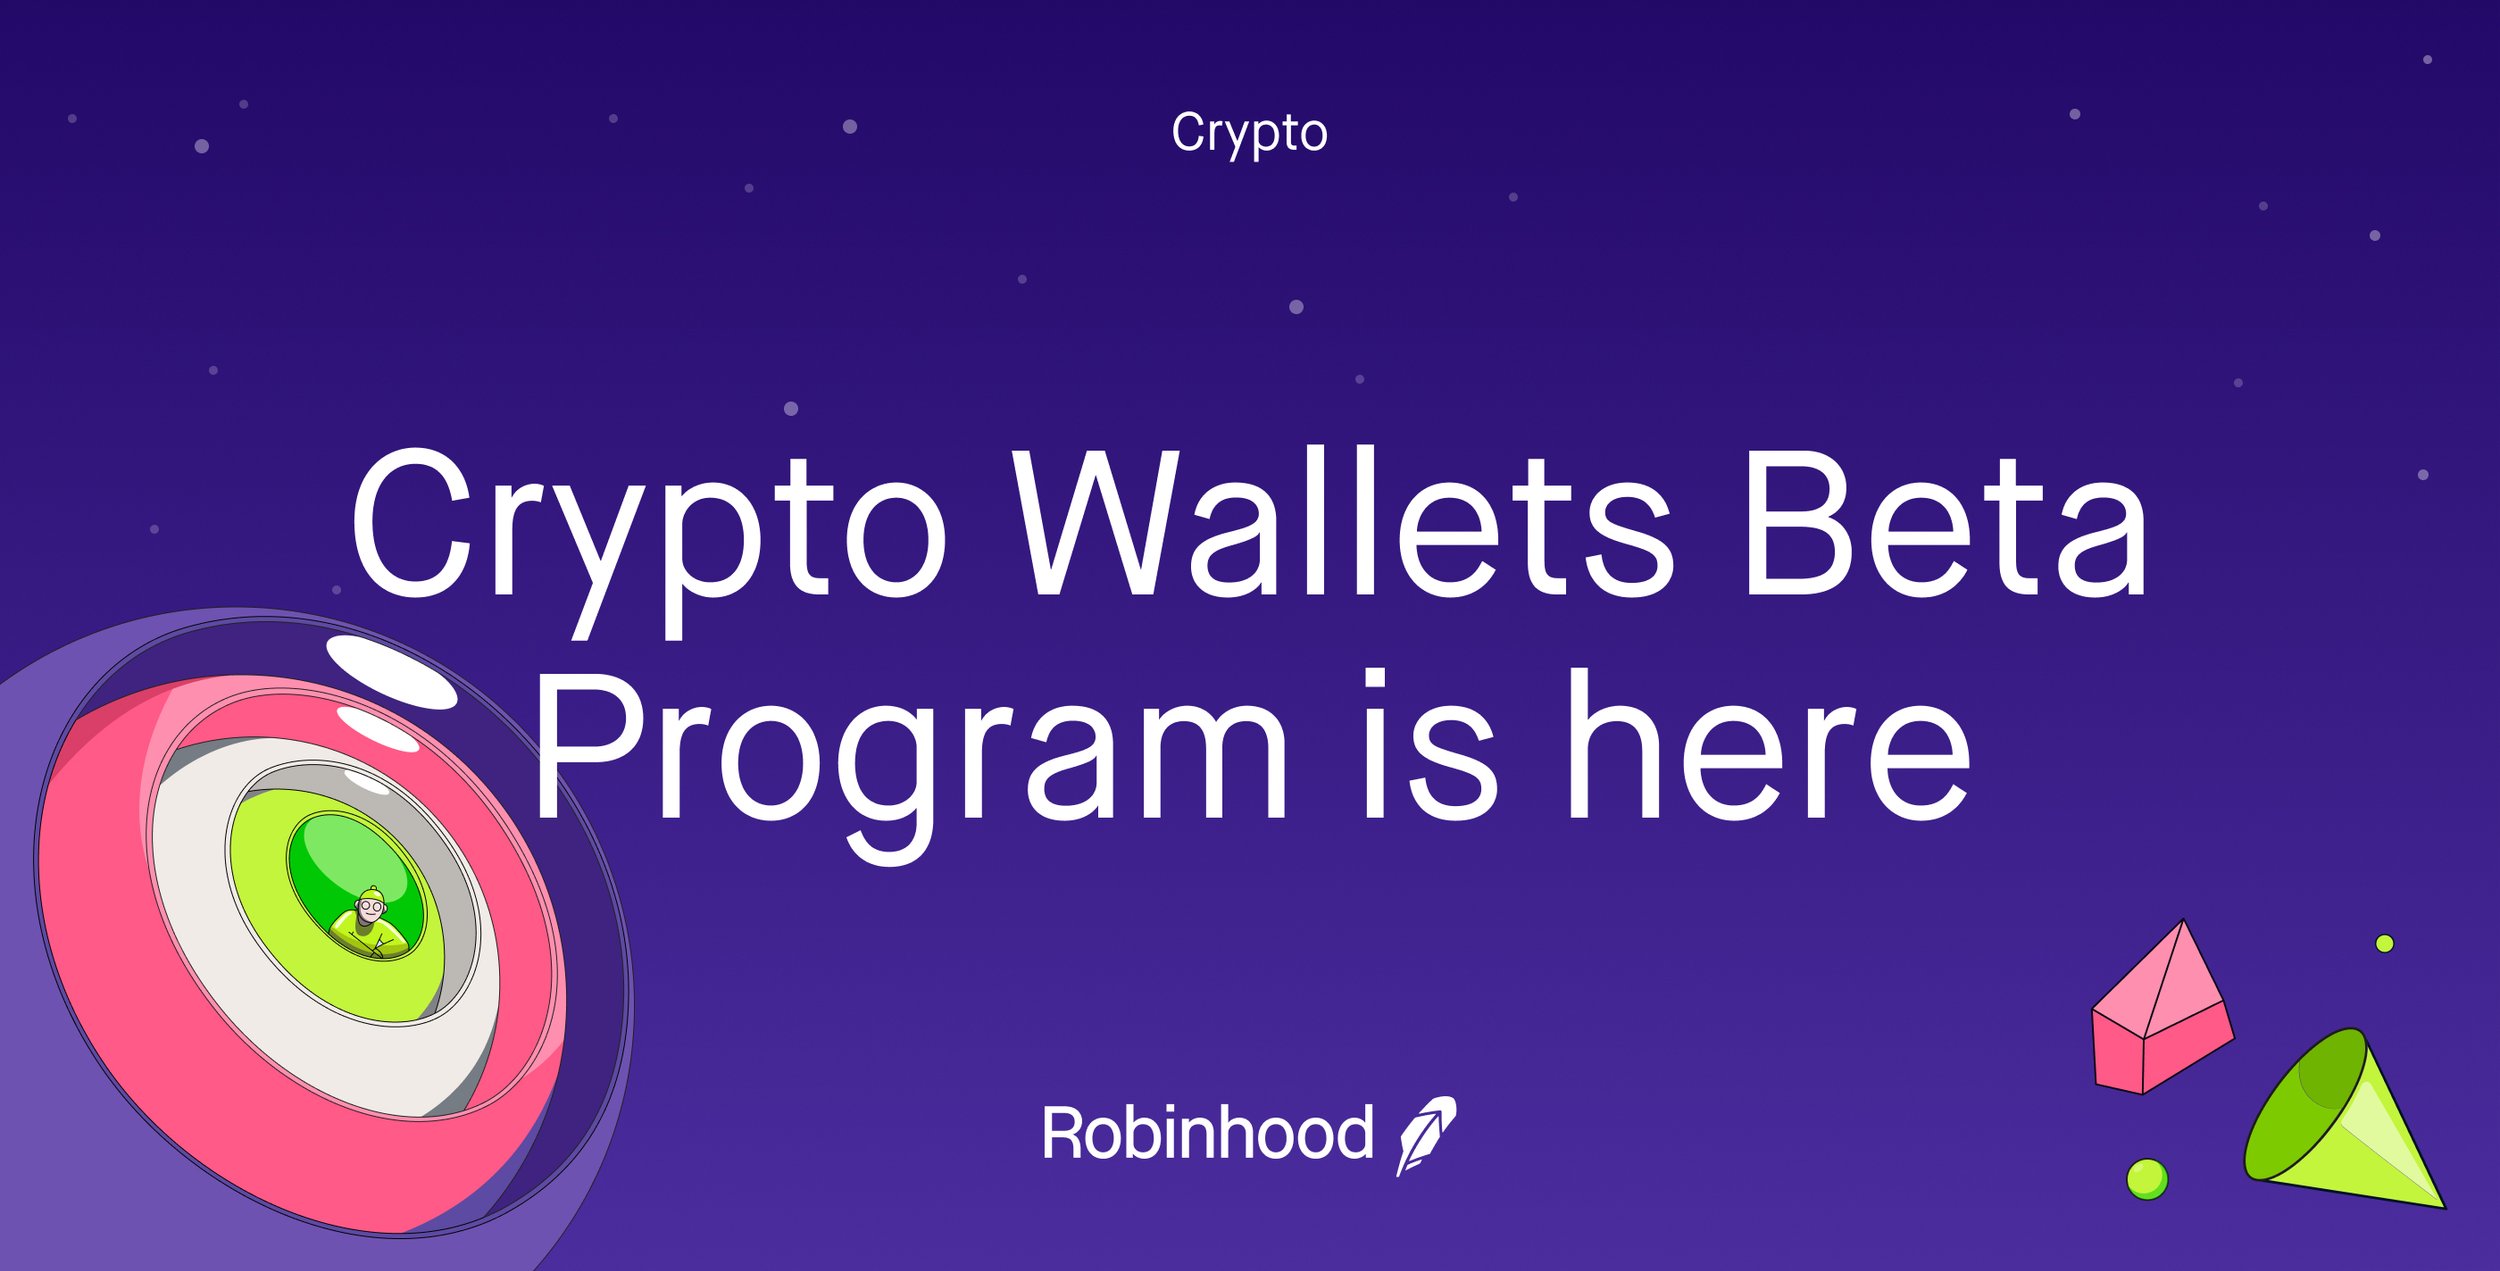 Crypto Wallets Beta Program is Here